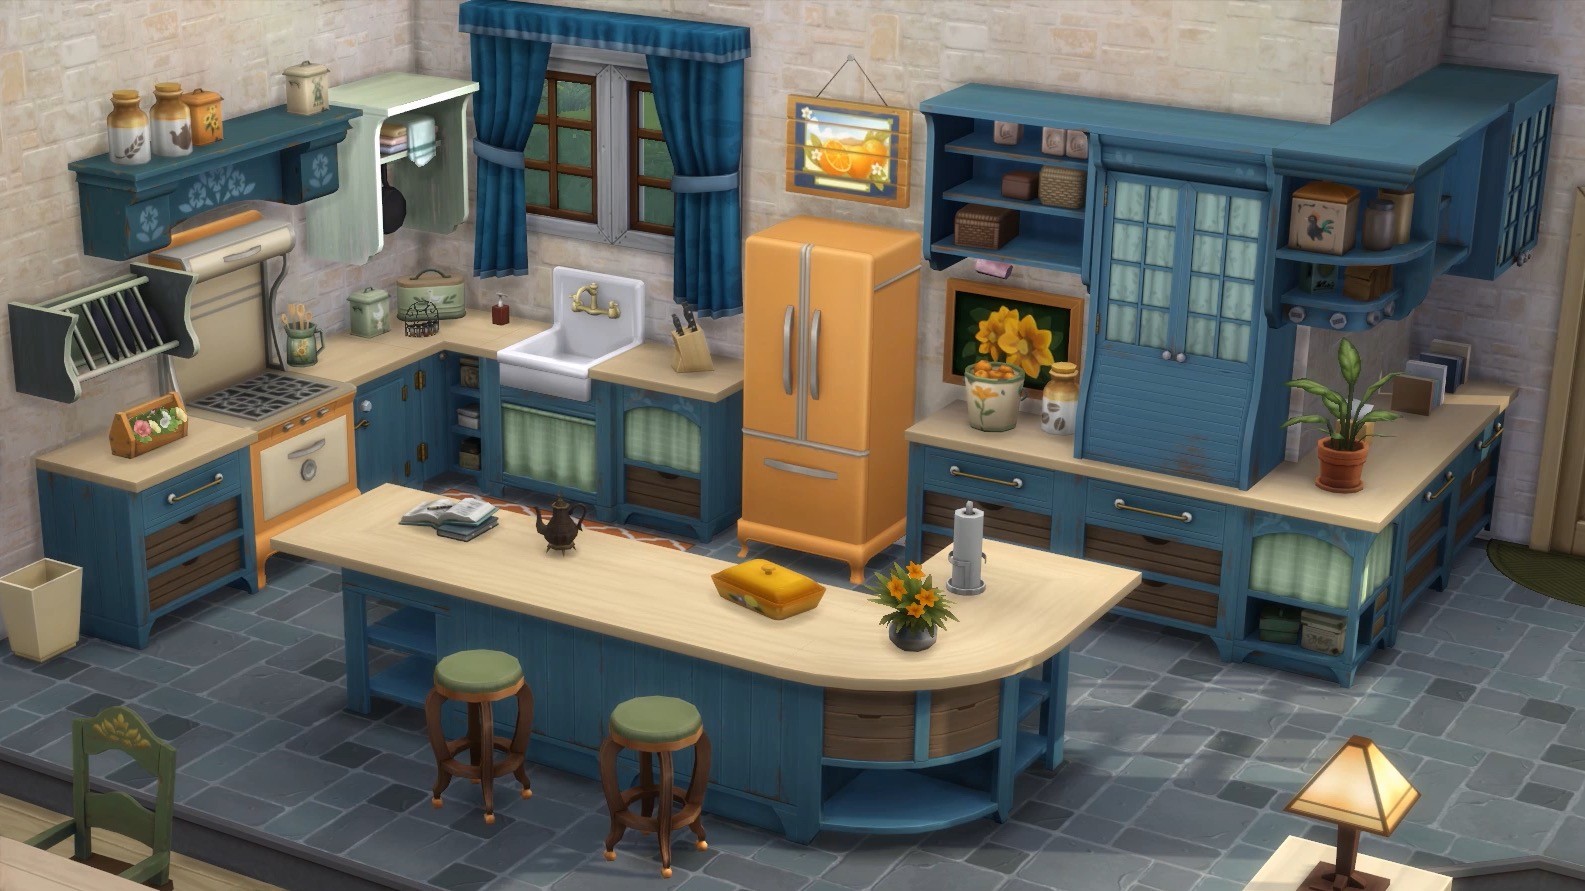 The Sims 4 - Country Kitchen Kit DLC Origin CD Key 7.59 usd